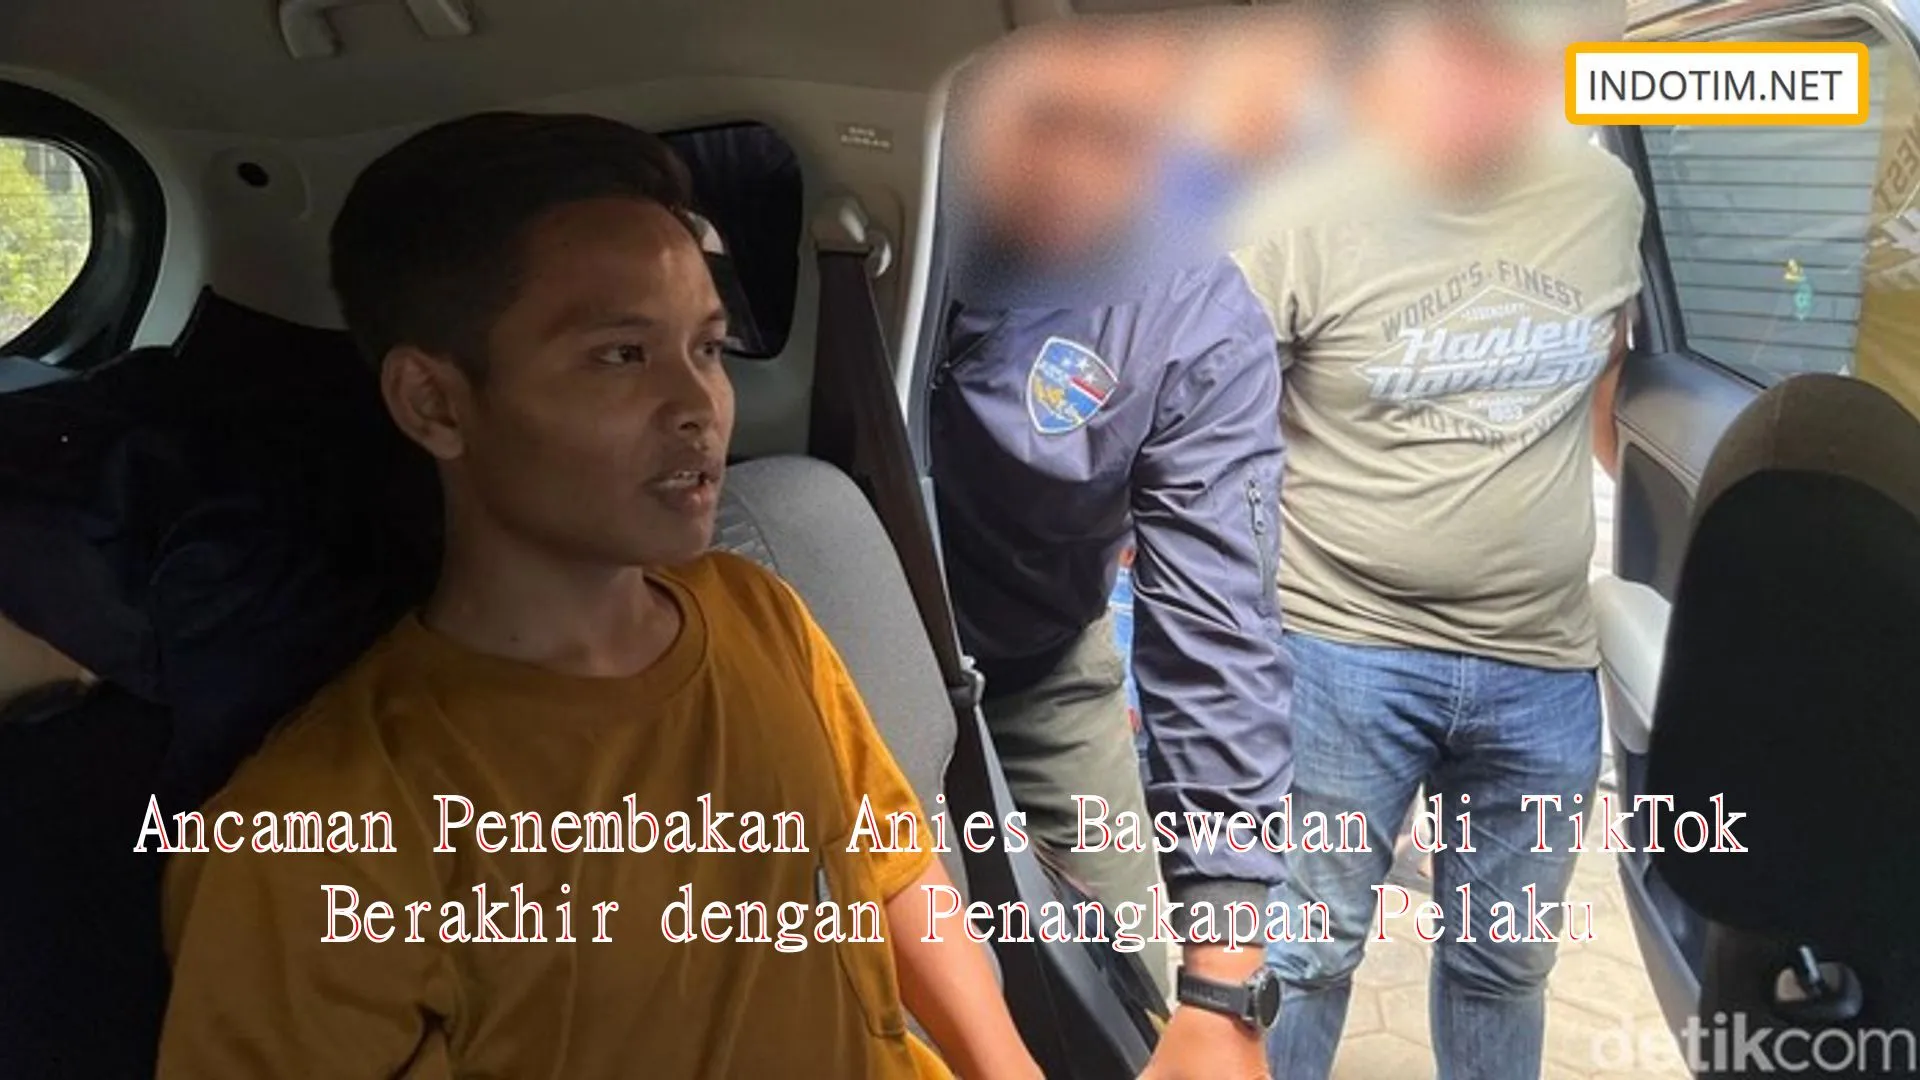 Ancaman Penembakan Anies Baswedan di TikTok Berakhir dengan Penangkapan Pelaku